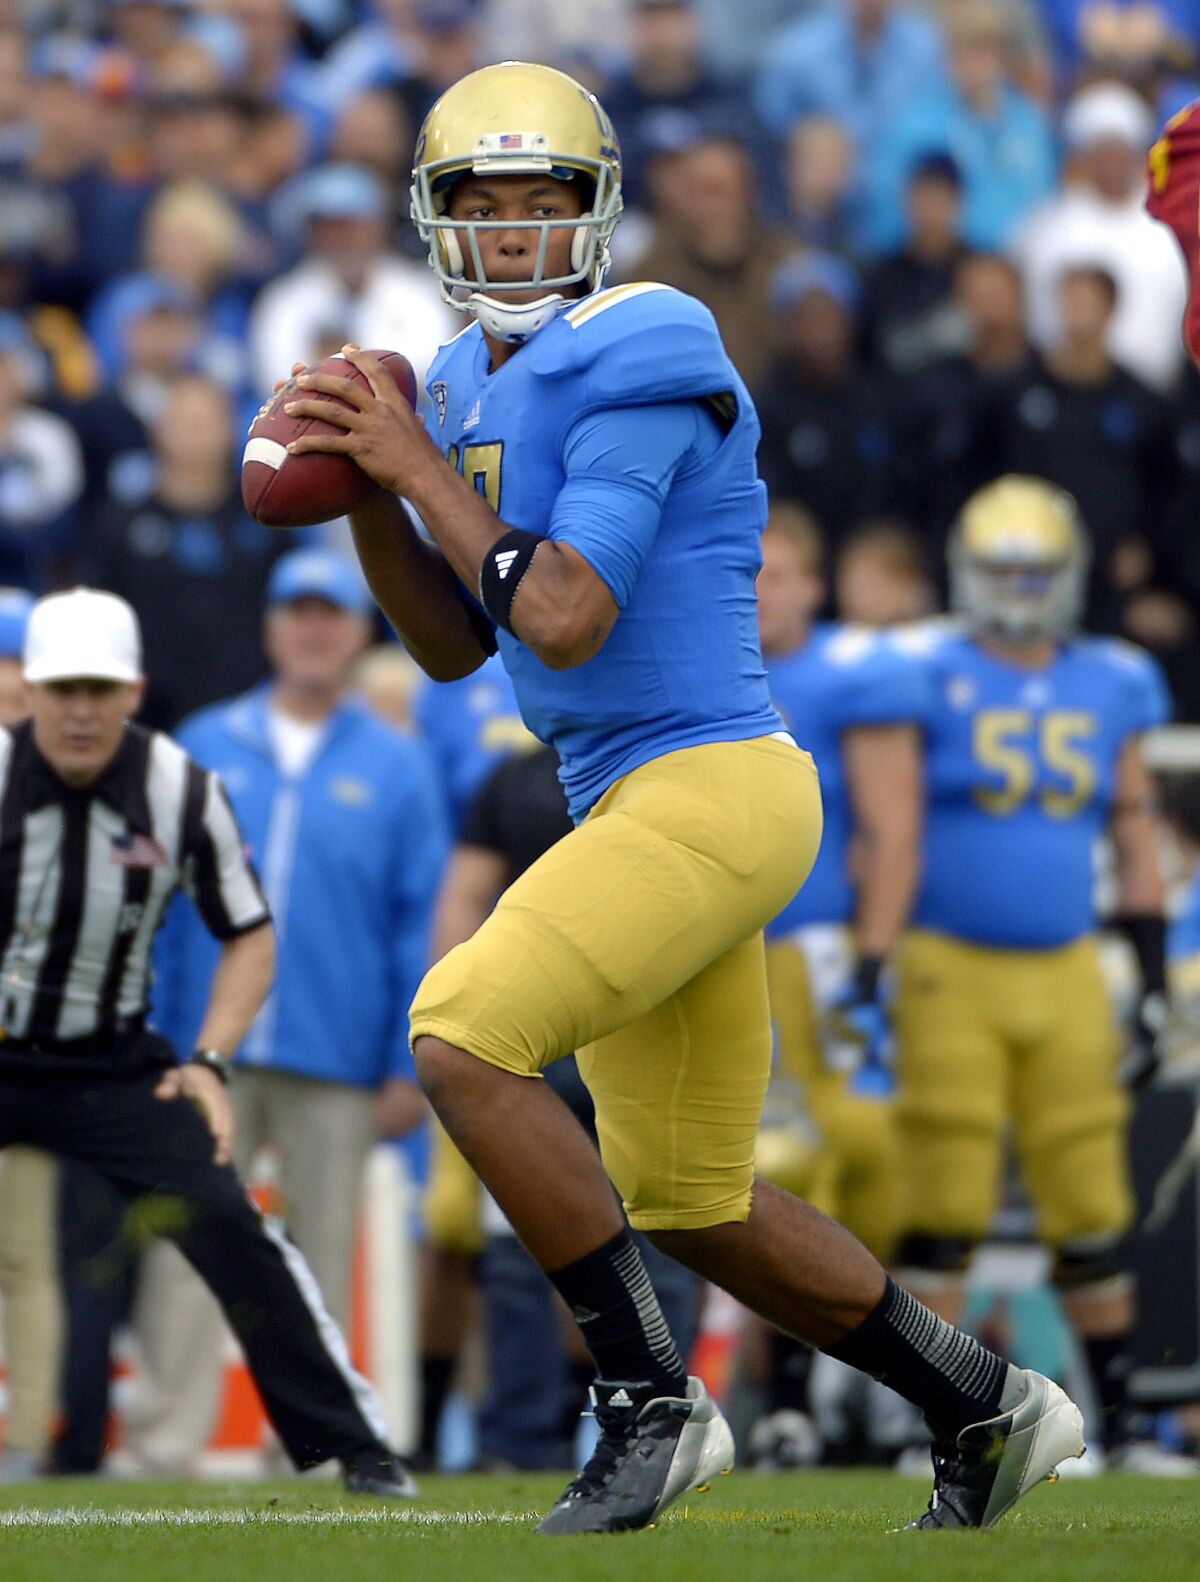 UCLA quarterback Brett Hundley is ready to pass